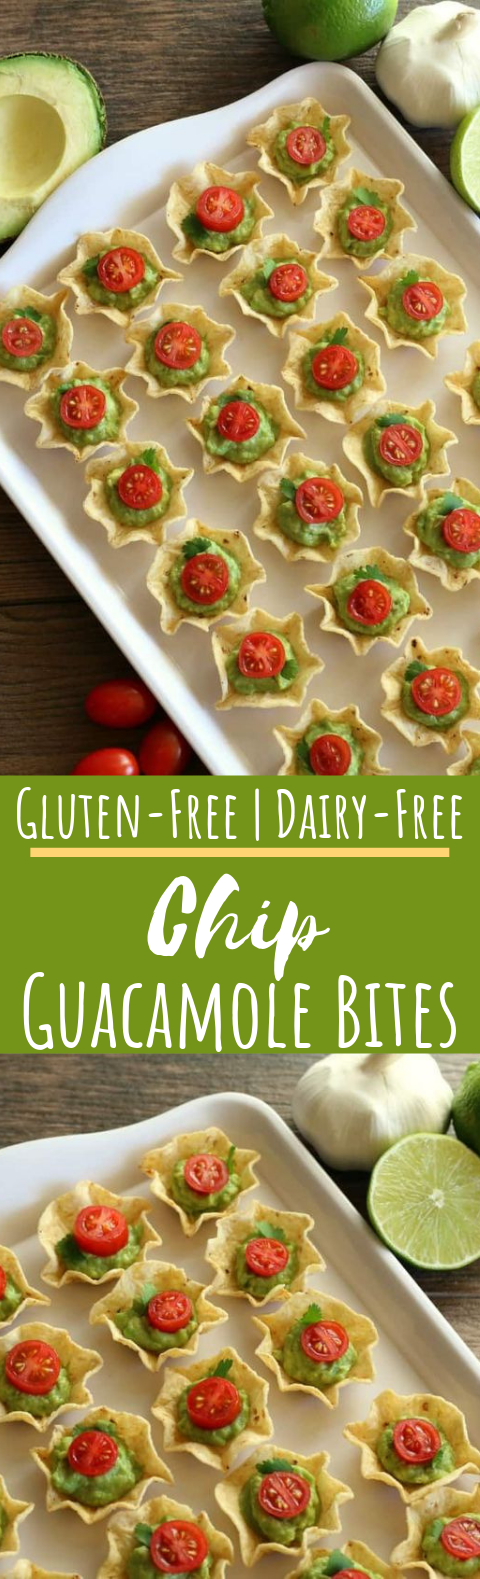 Gluten-free Chip and Guacamole Bites #appetizers #glutenfree